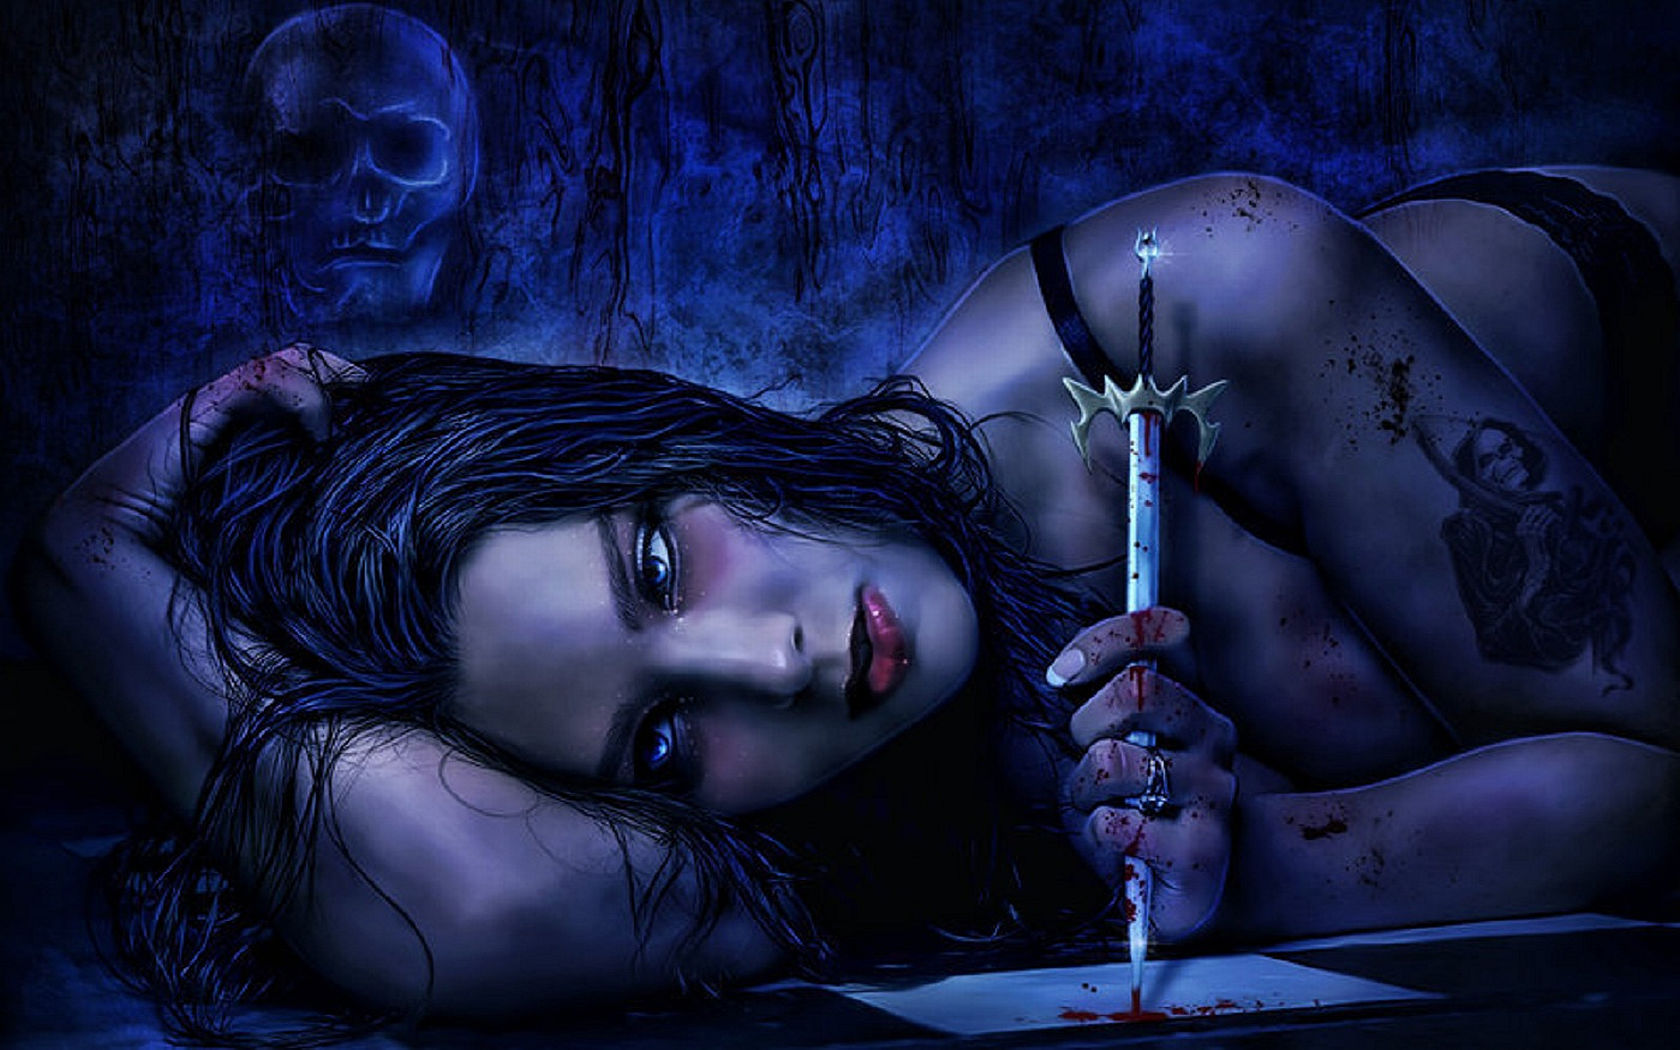 dark horror gothic fantasy women vampire mood weapons knife wallpaper